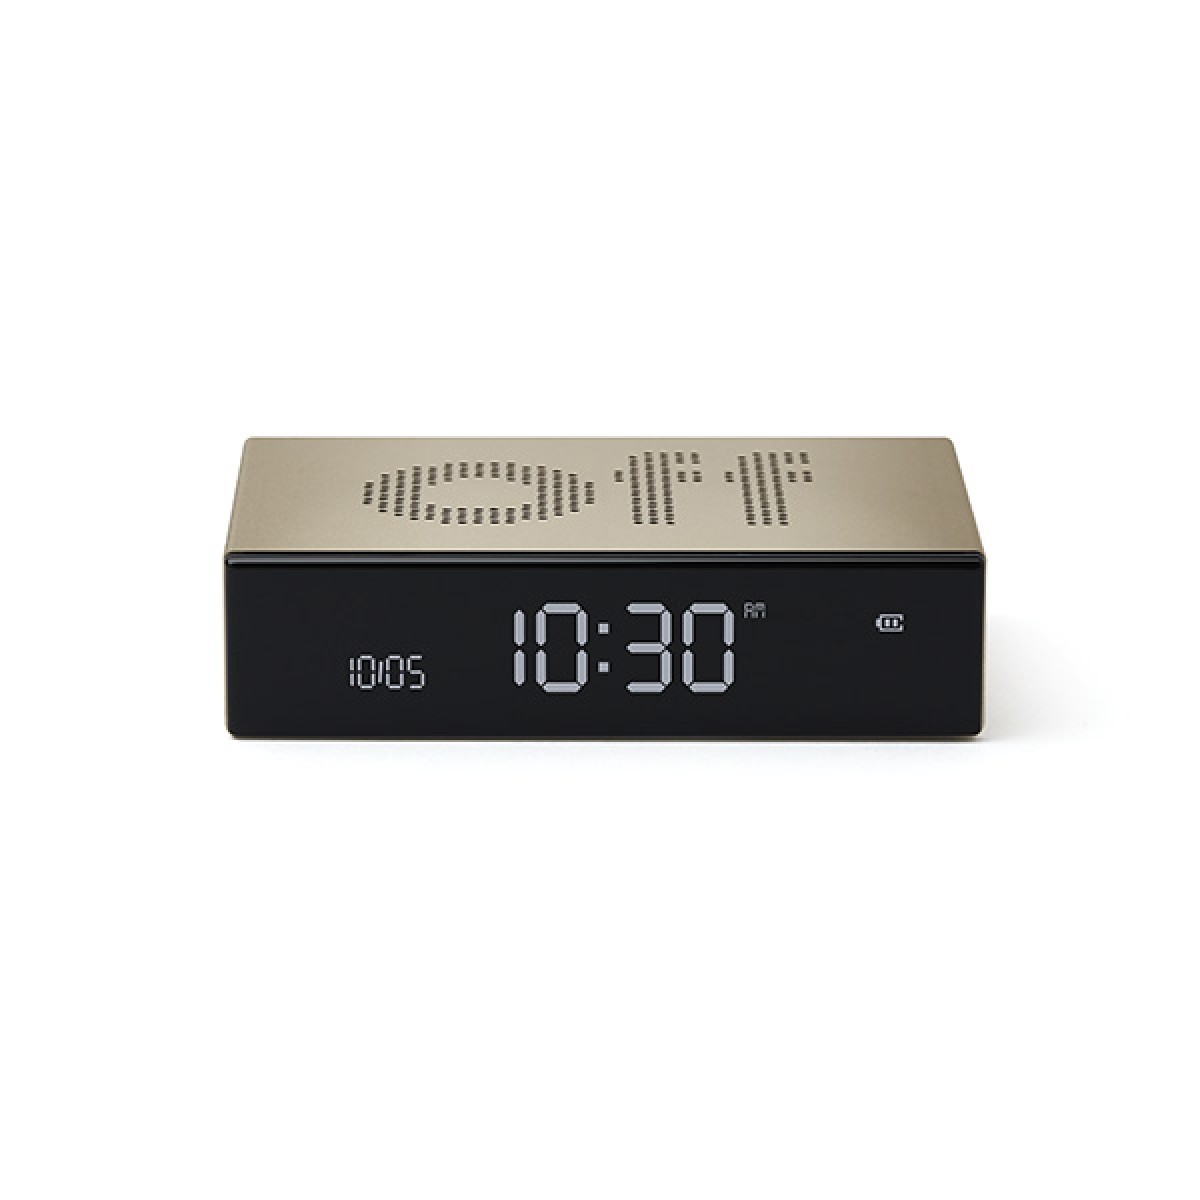 Lexon - Flip Premium - Reversible LCD alarm clock - Gold